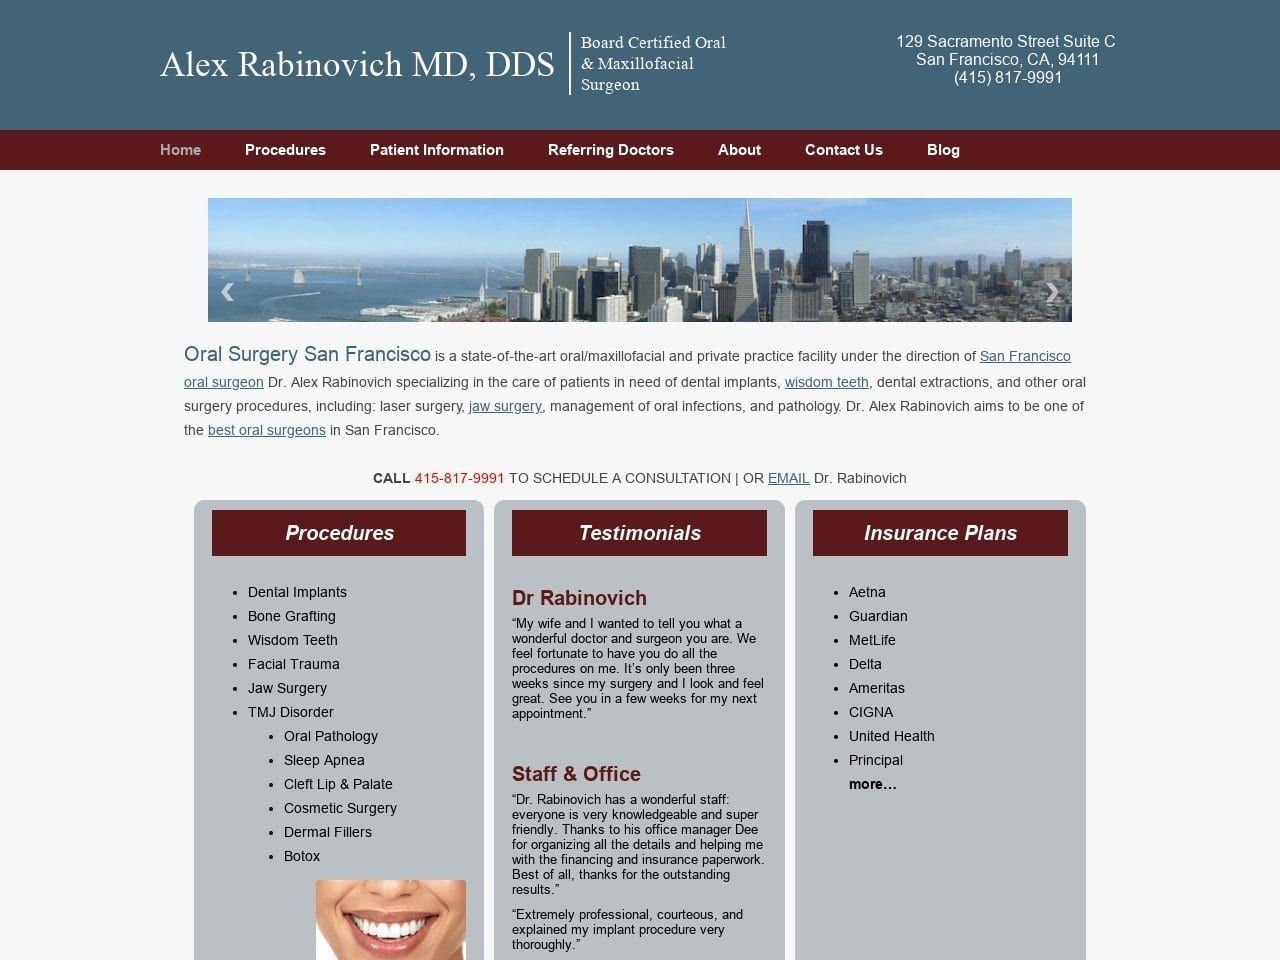 Alex Rabinovich DDS MD Website Screenshot from doctorrabinovich.com